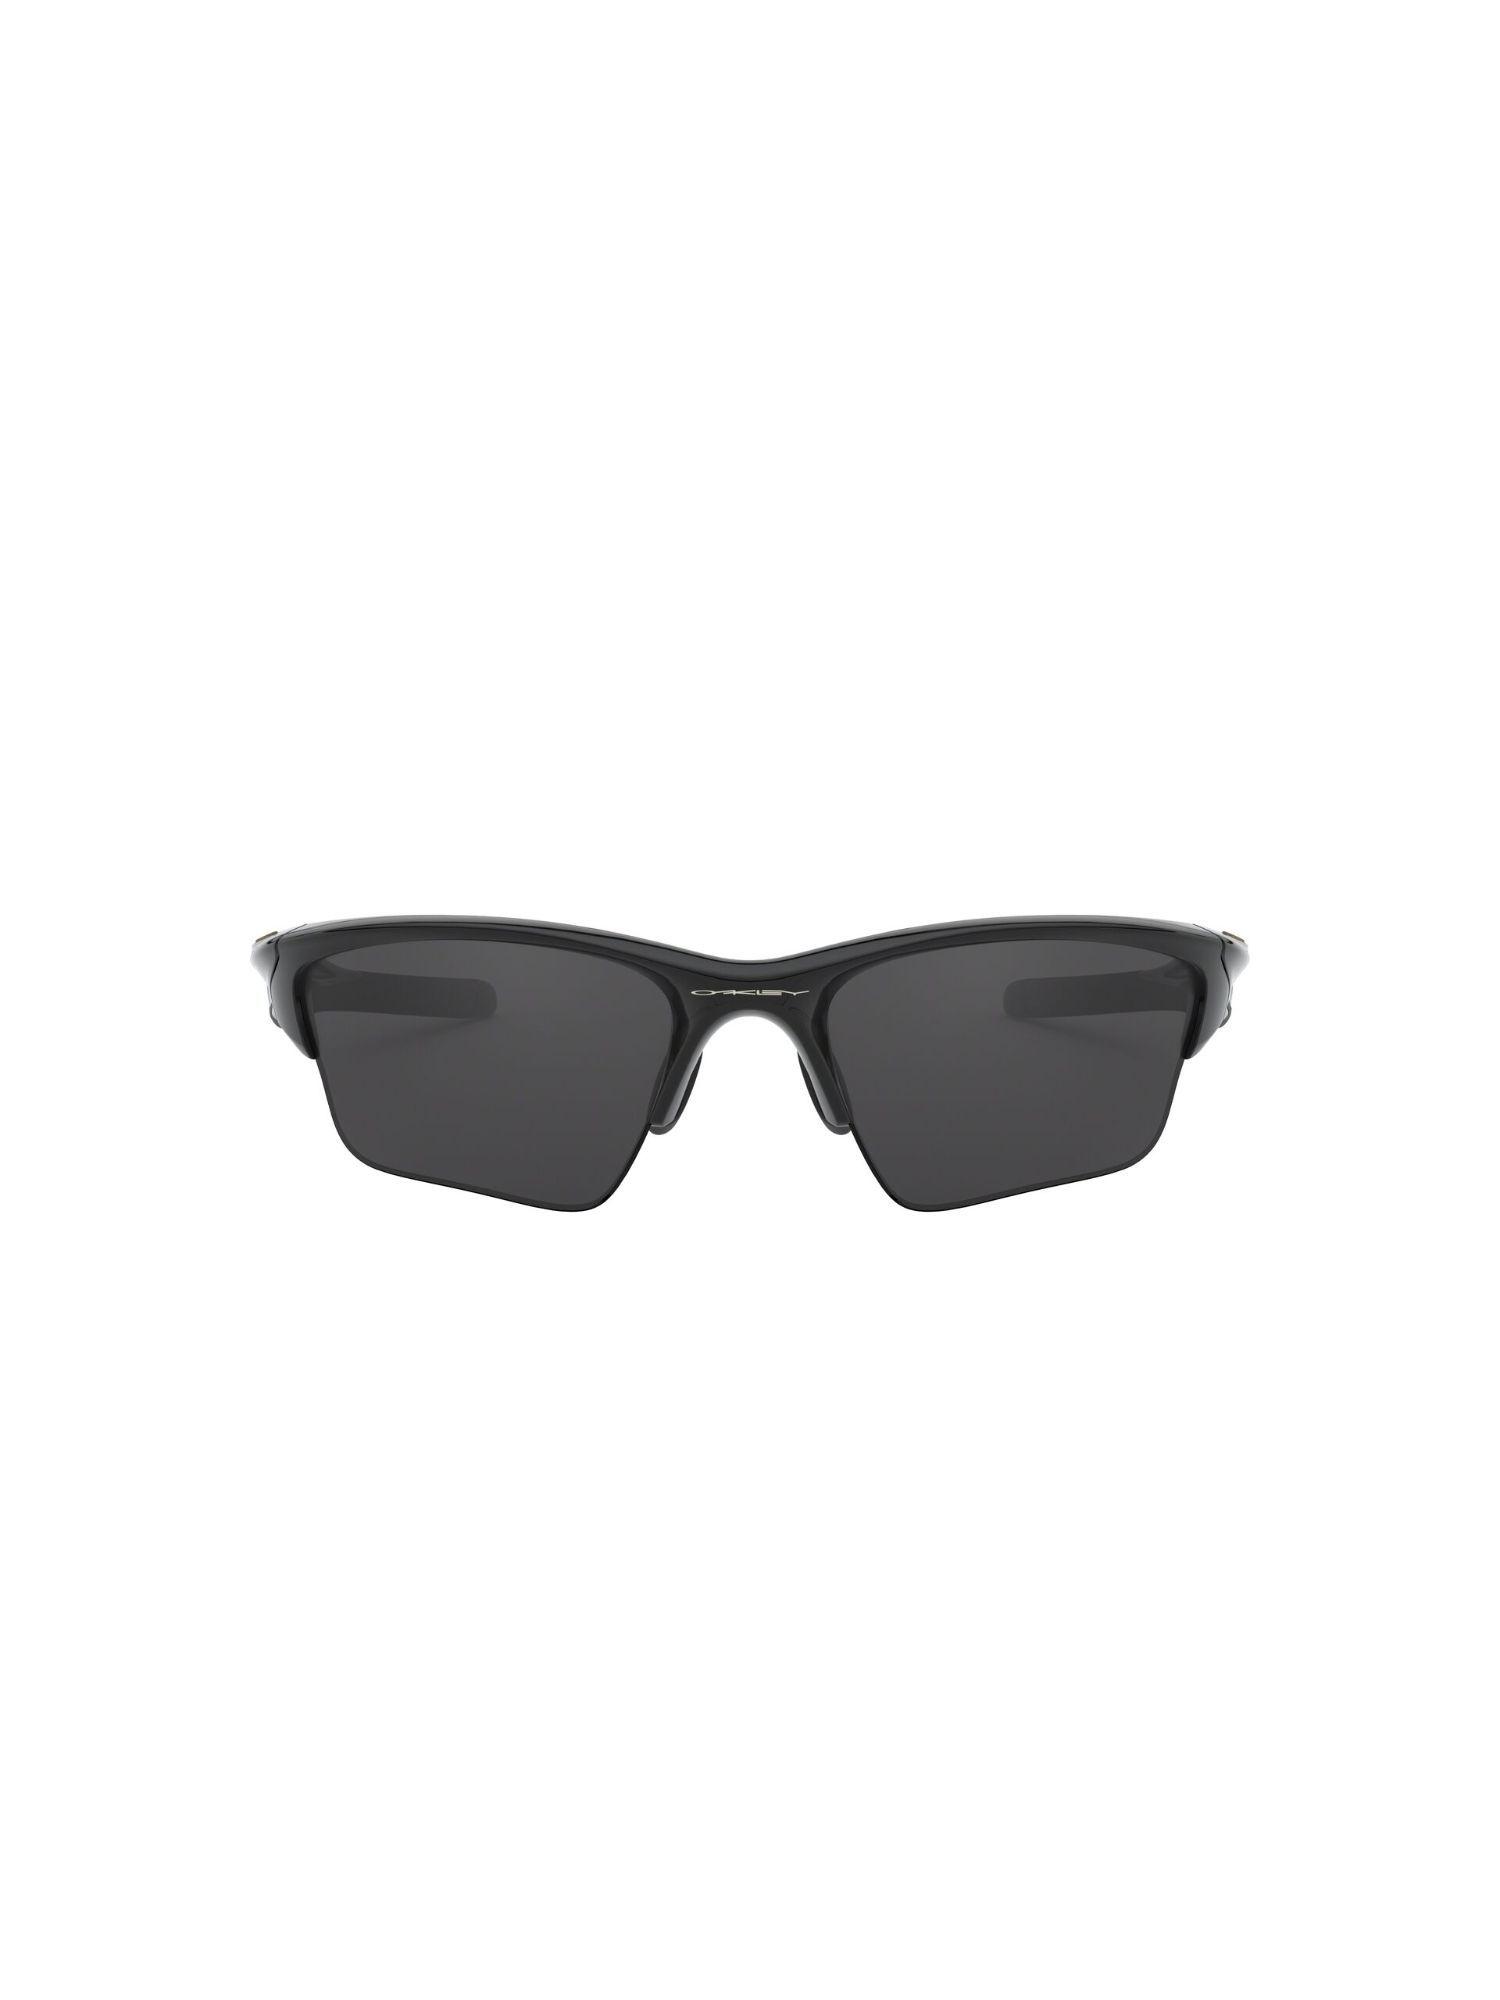 Grey UV Protection Rectangle Sunglasses -0OO915491540162